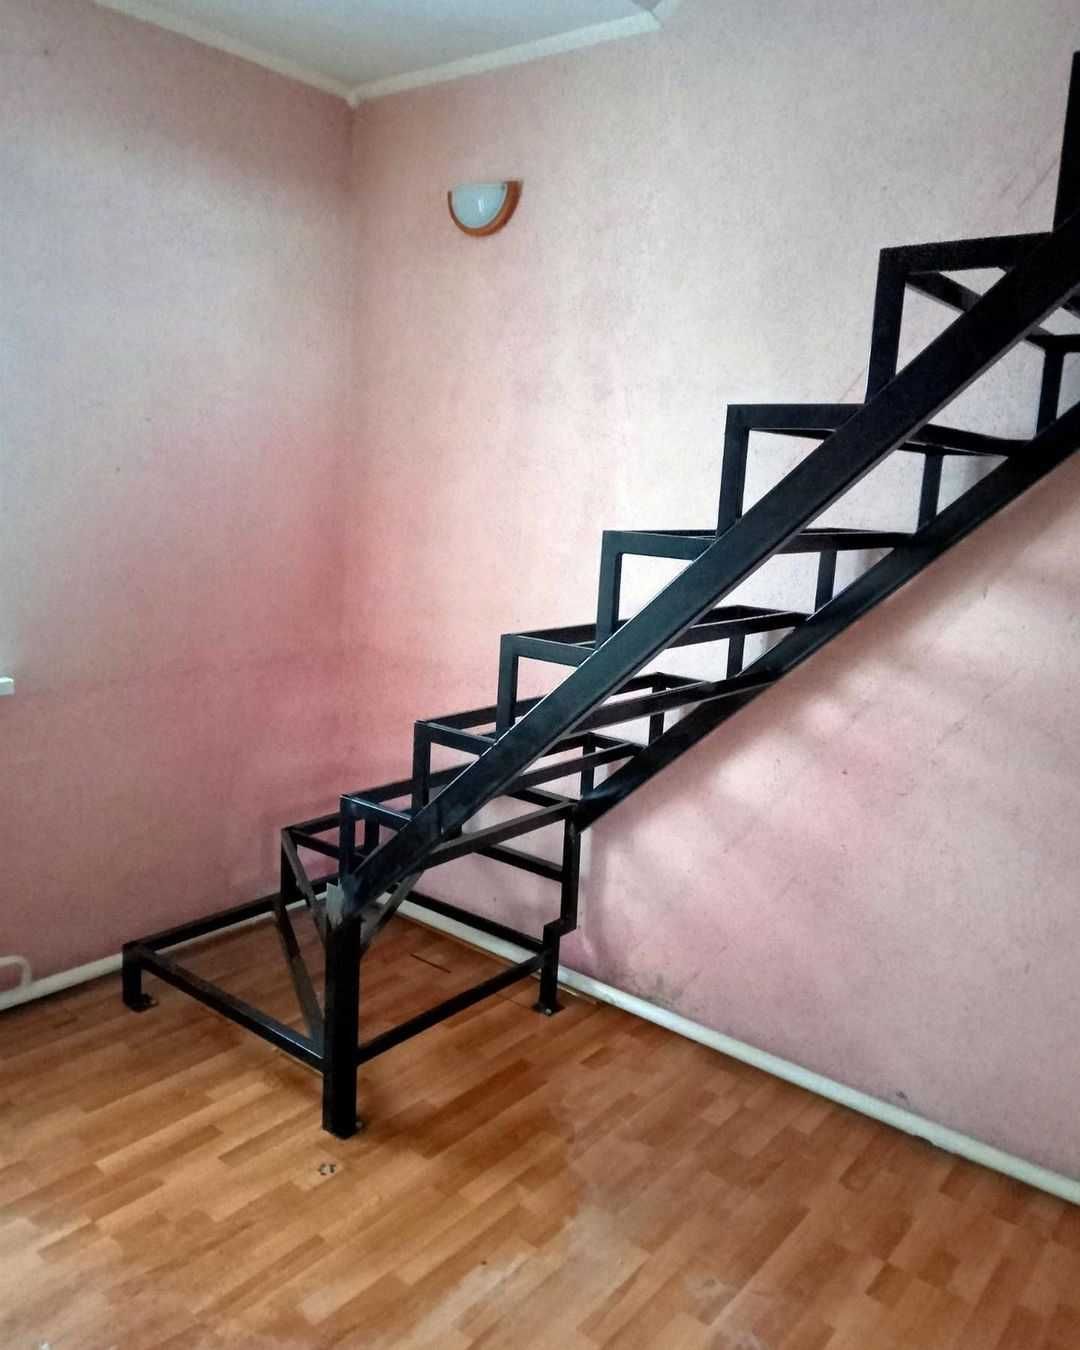 СХОДИ- 1980грн/сх, металеві сходи, лестница металлическая, каркас